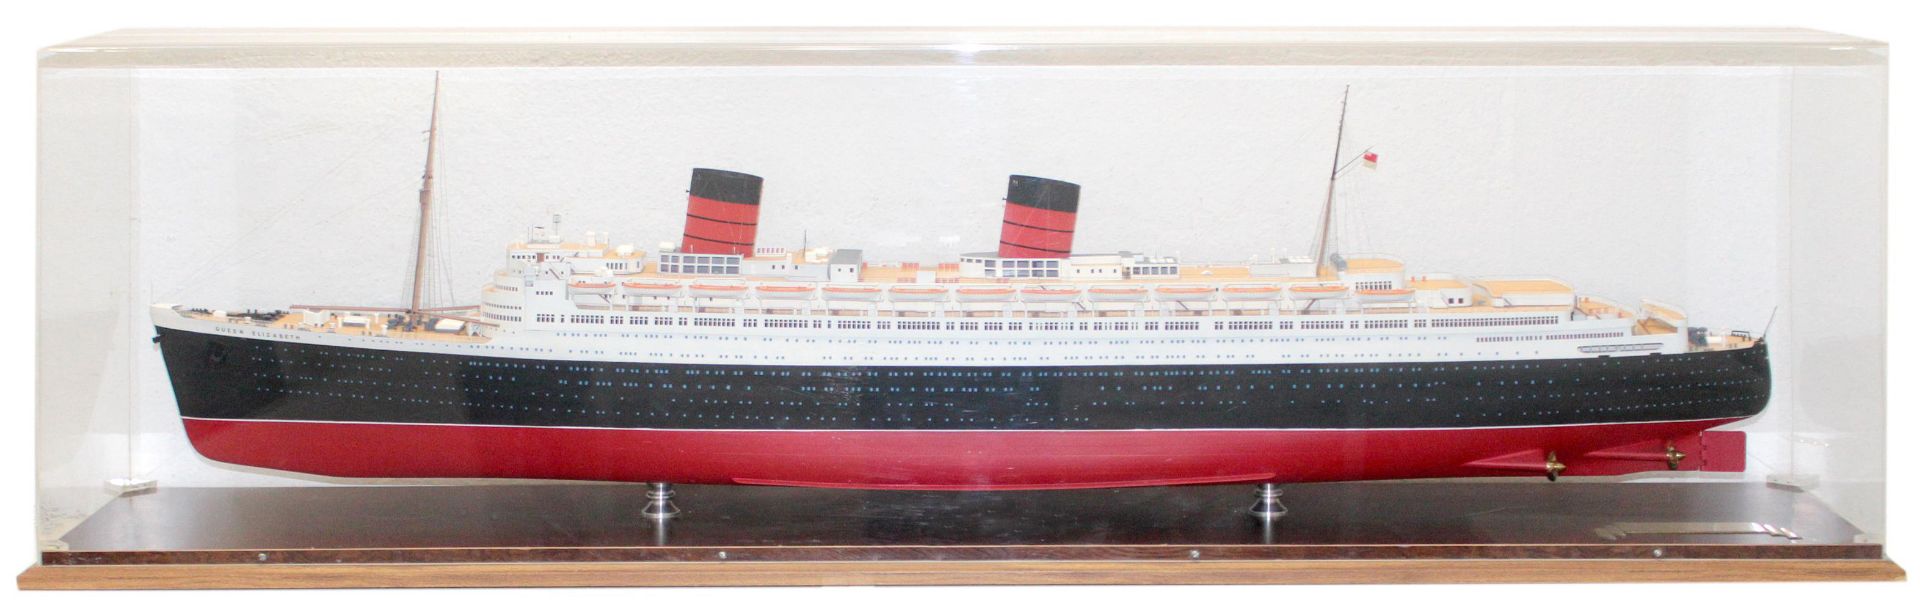 RMS Queen Elizabeth. - Image 3 of 3